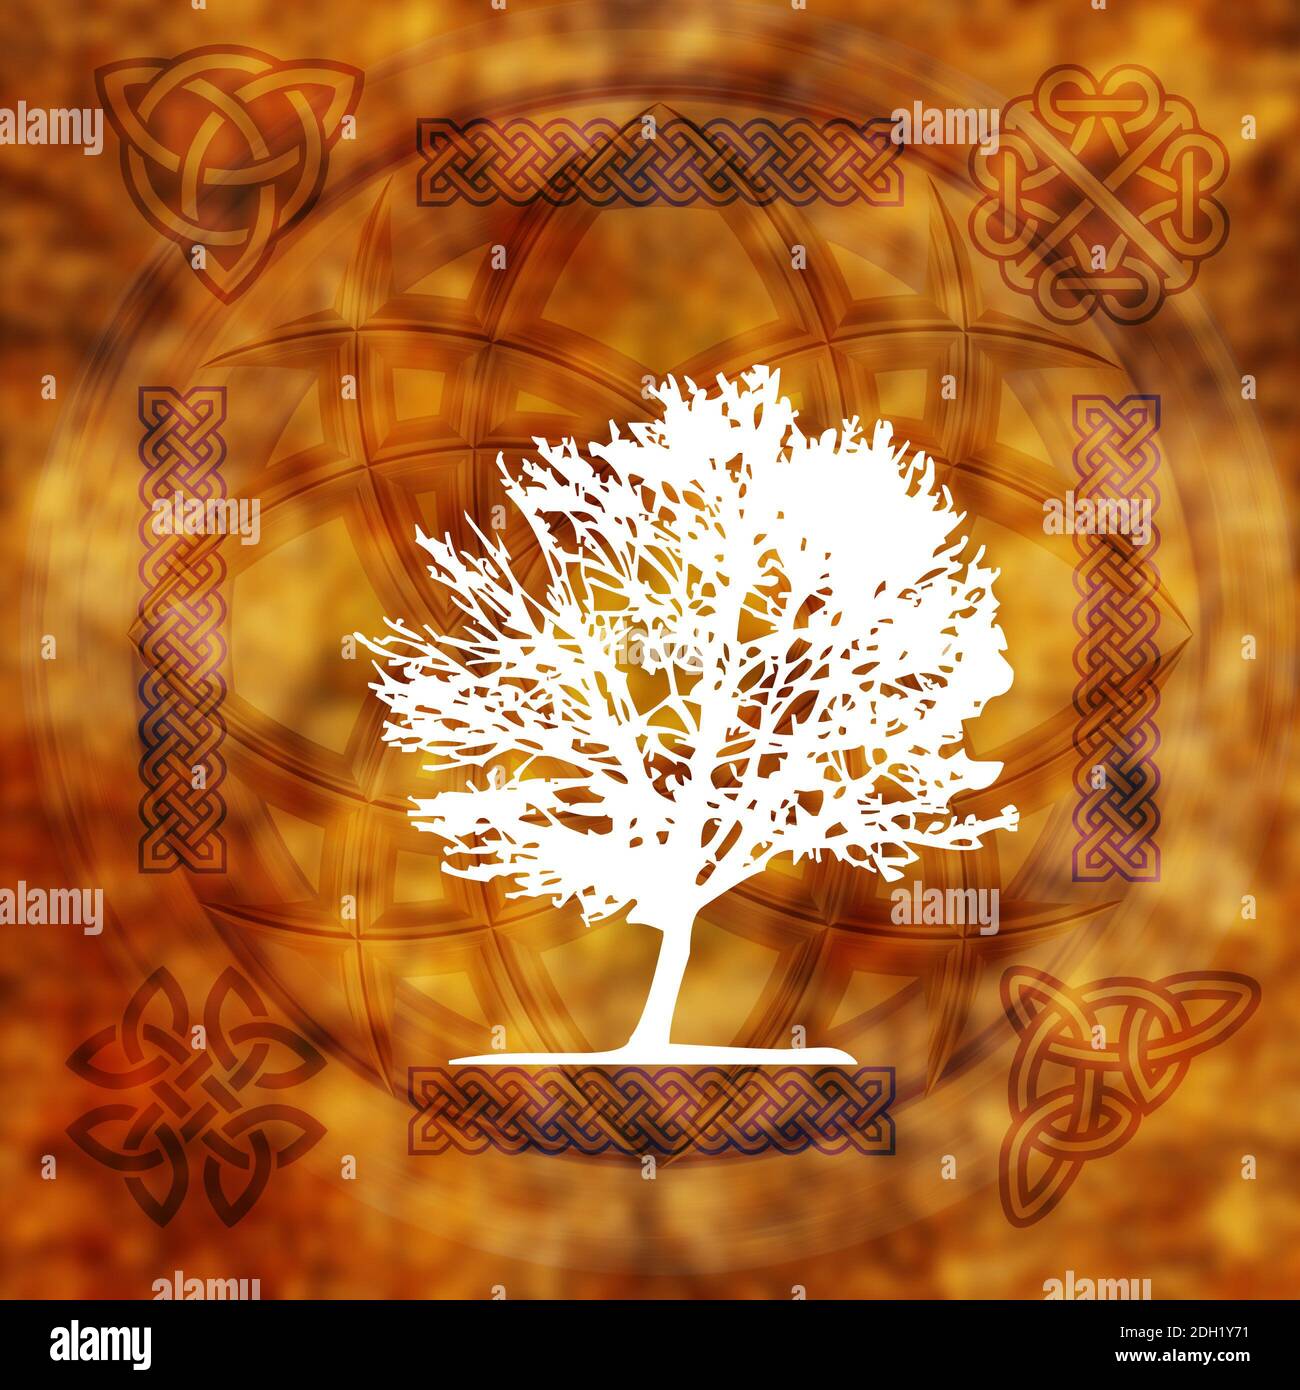 tree of life and Celtic symbols Stock Photo